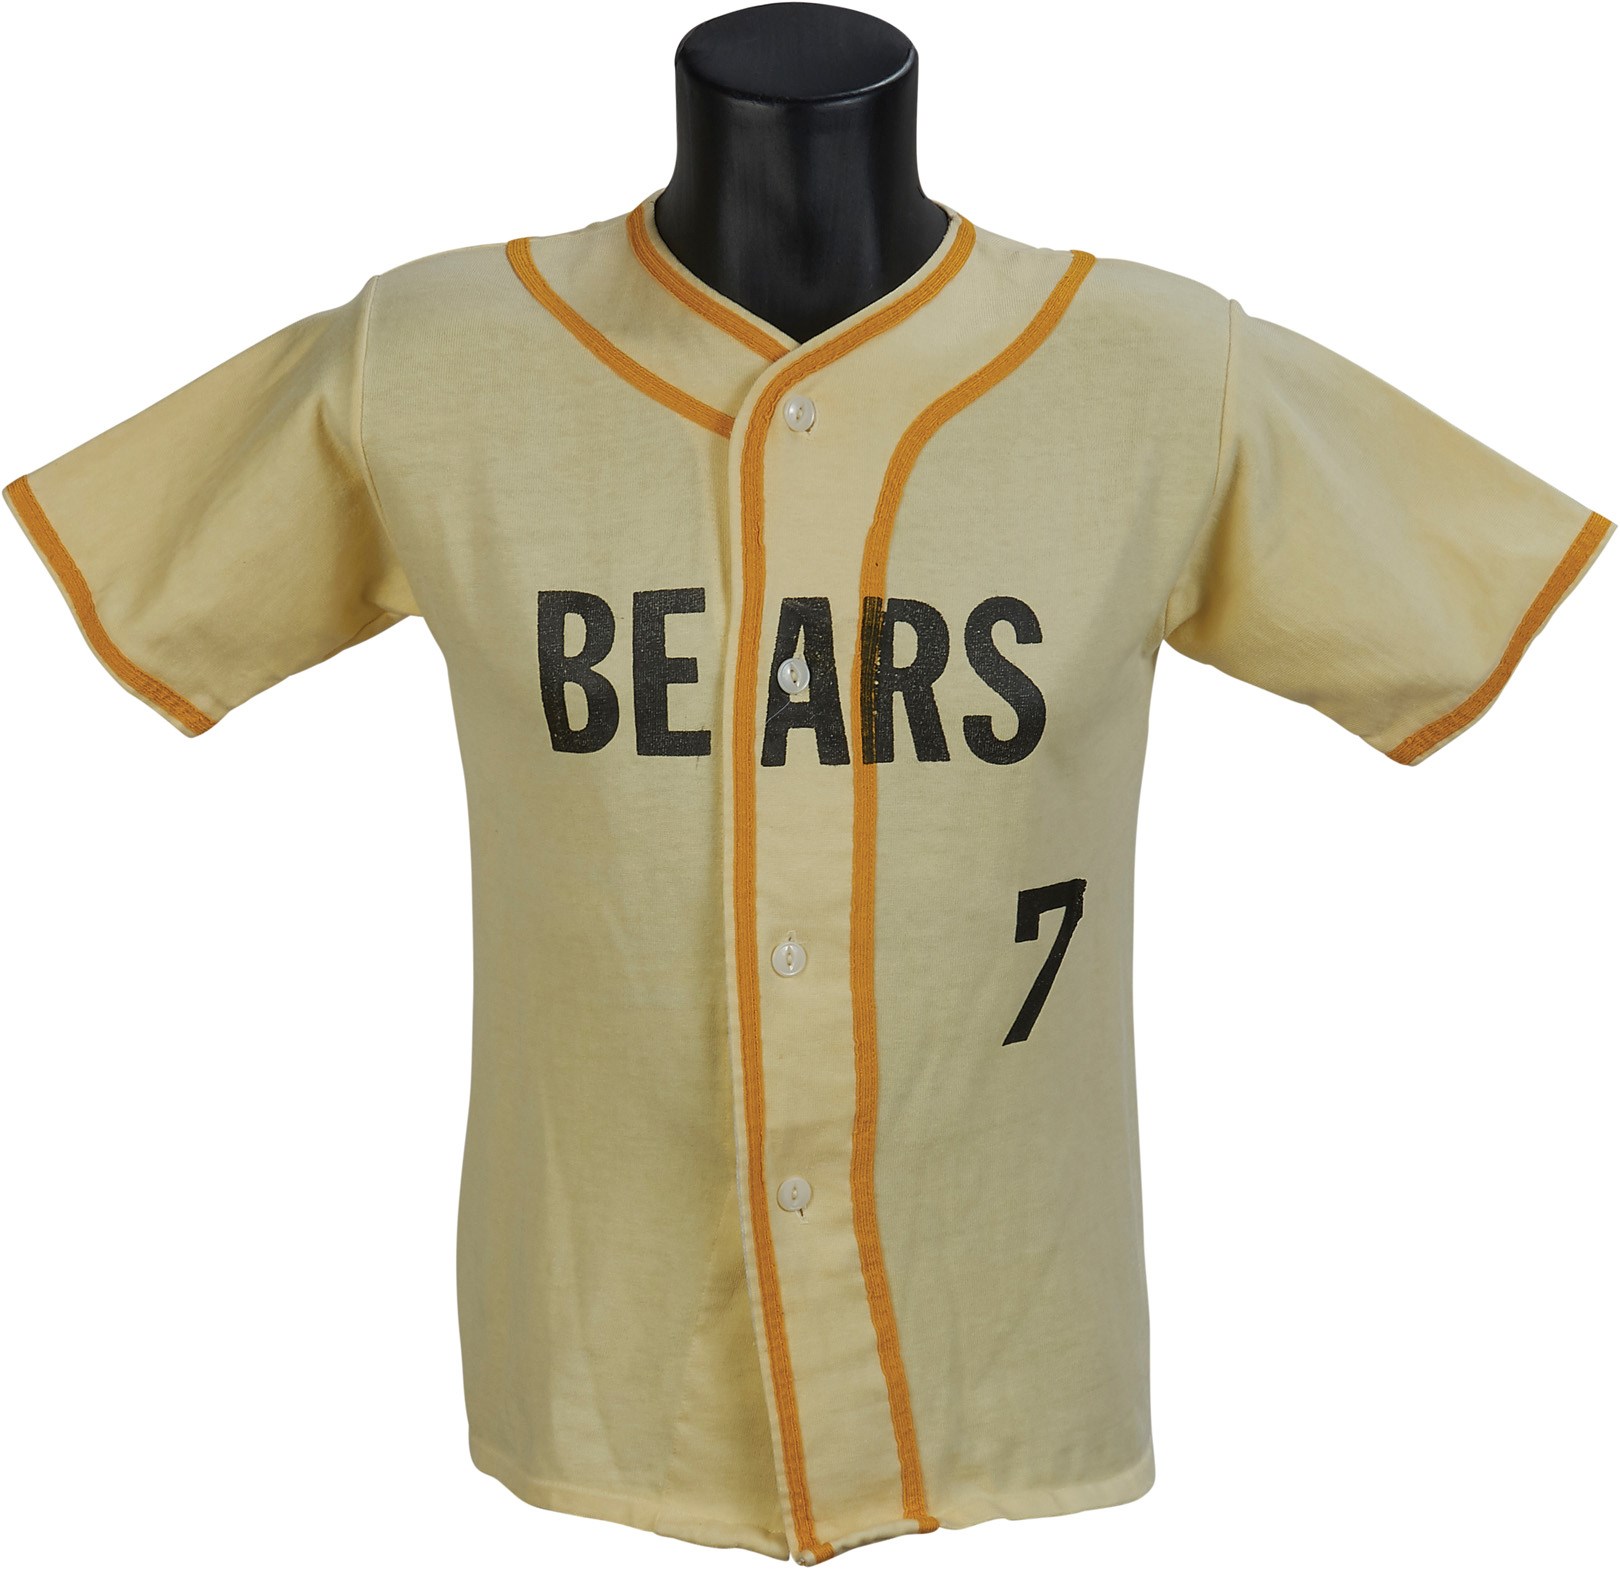 - 1976 Miguel Aguilar "Bad News Bears" Screen Worn Uniform